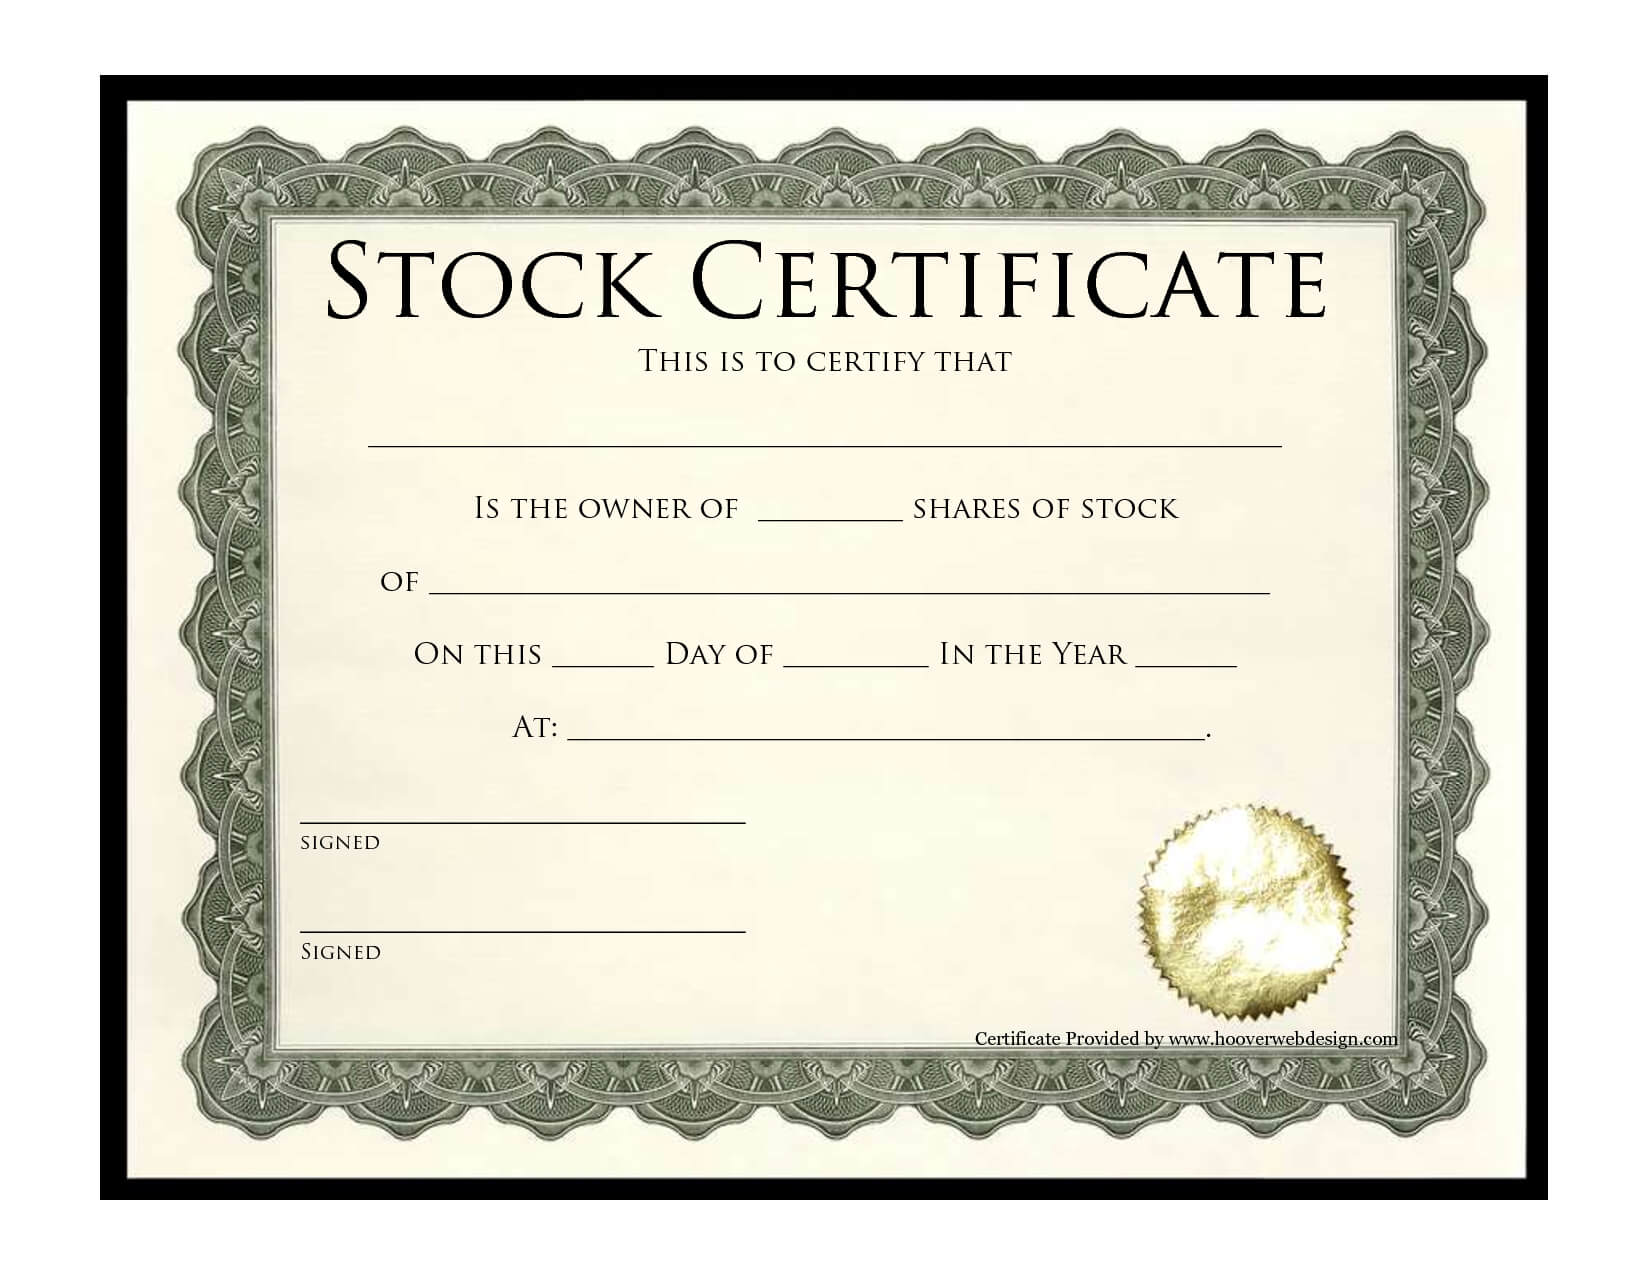 003 Template Ideas Free Stock Certificate Remarkable Pertaining To Free Stock Certificate Template Download